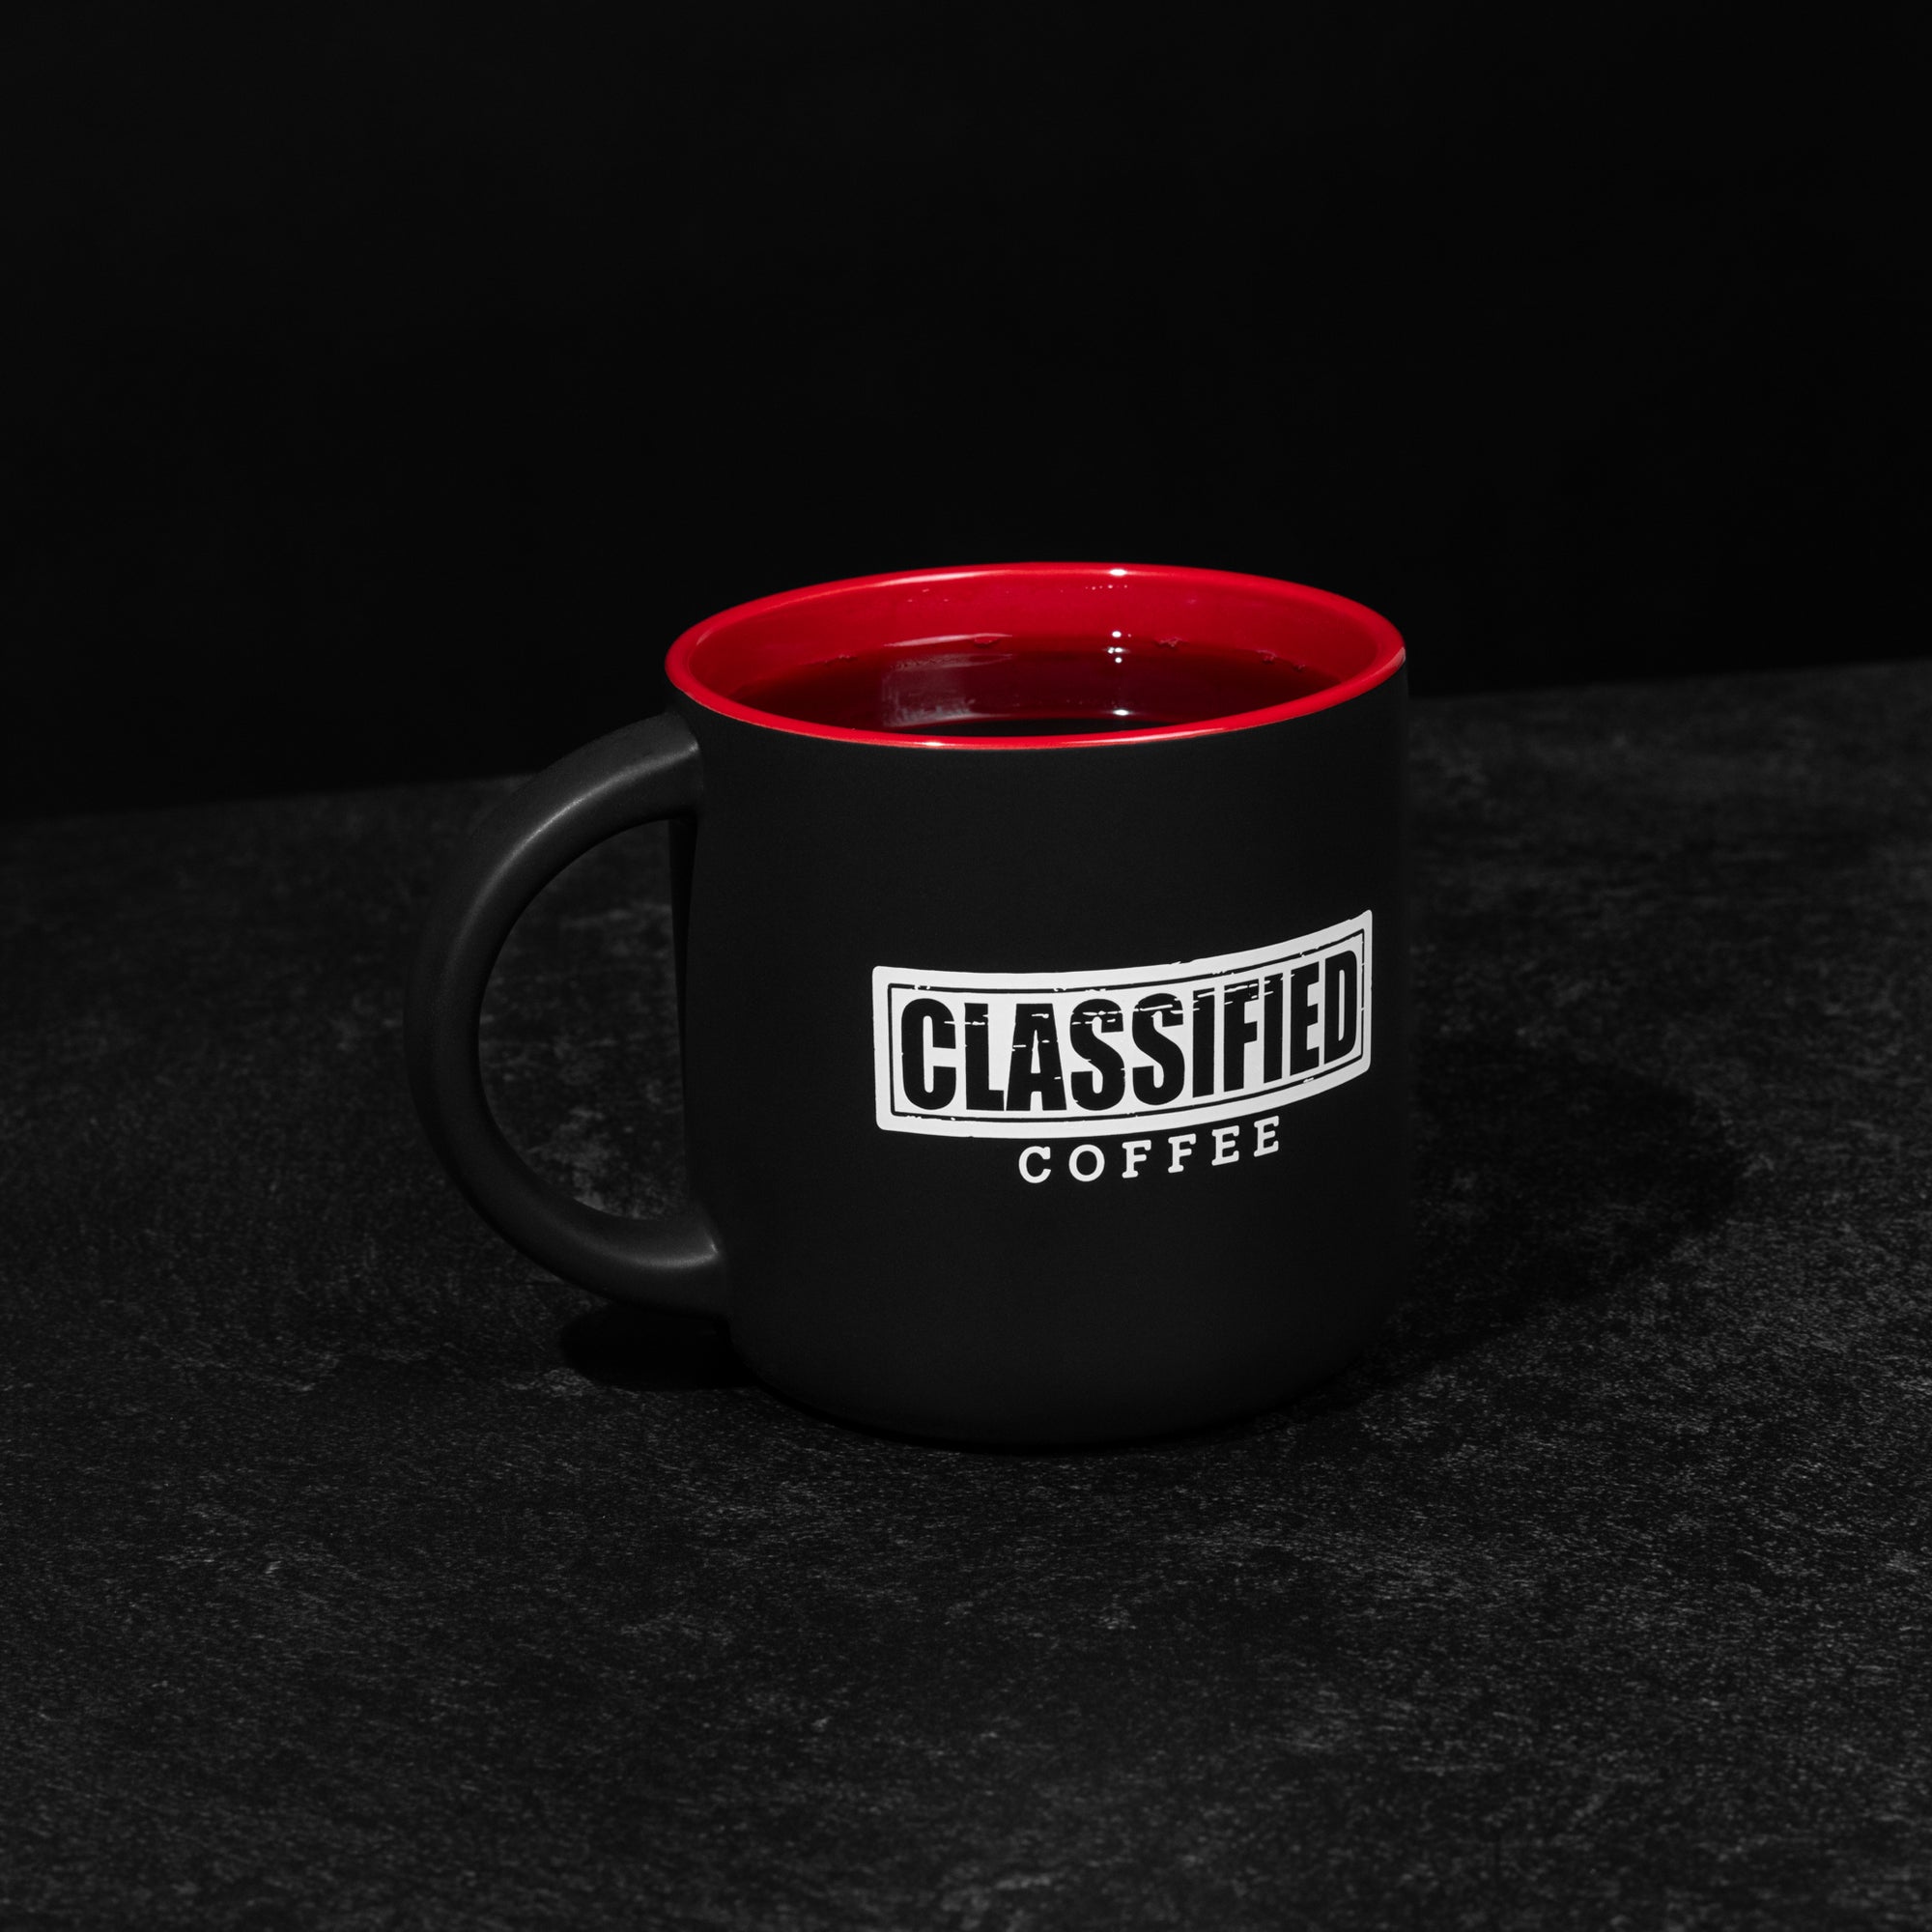 Classified Coffee Mug filled with coffee